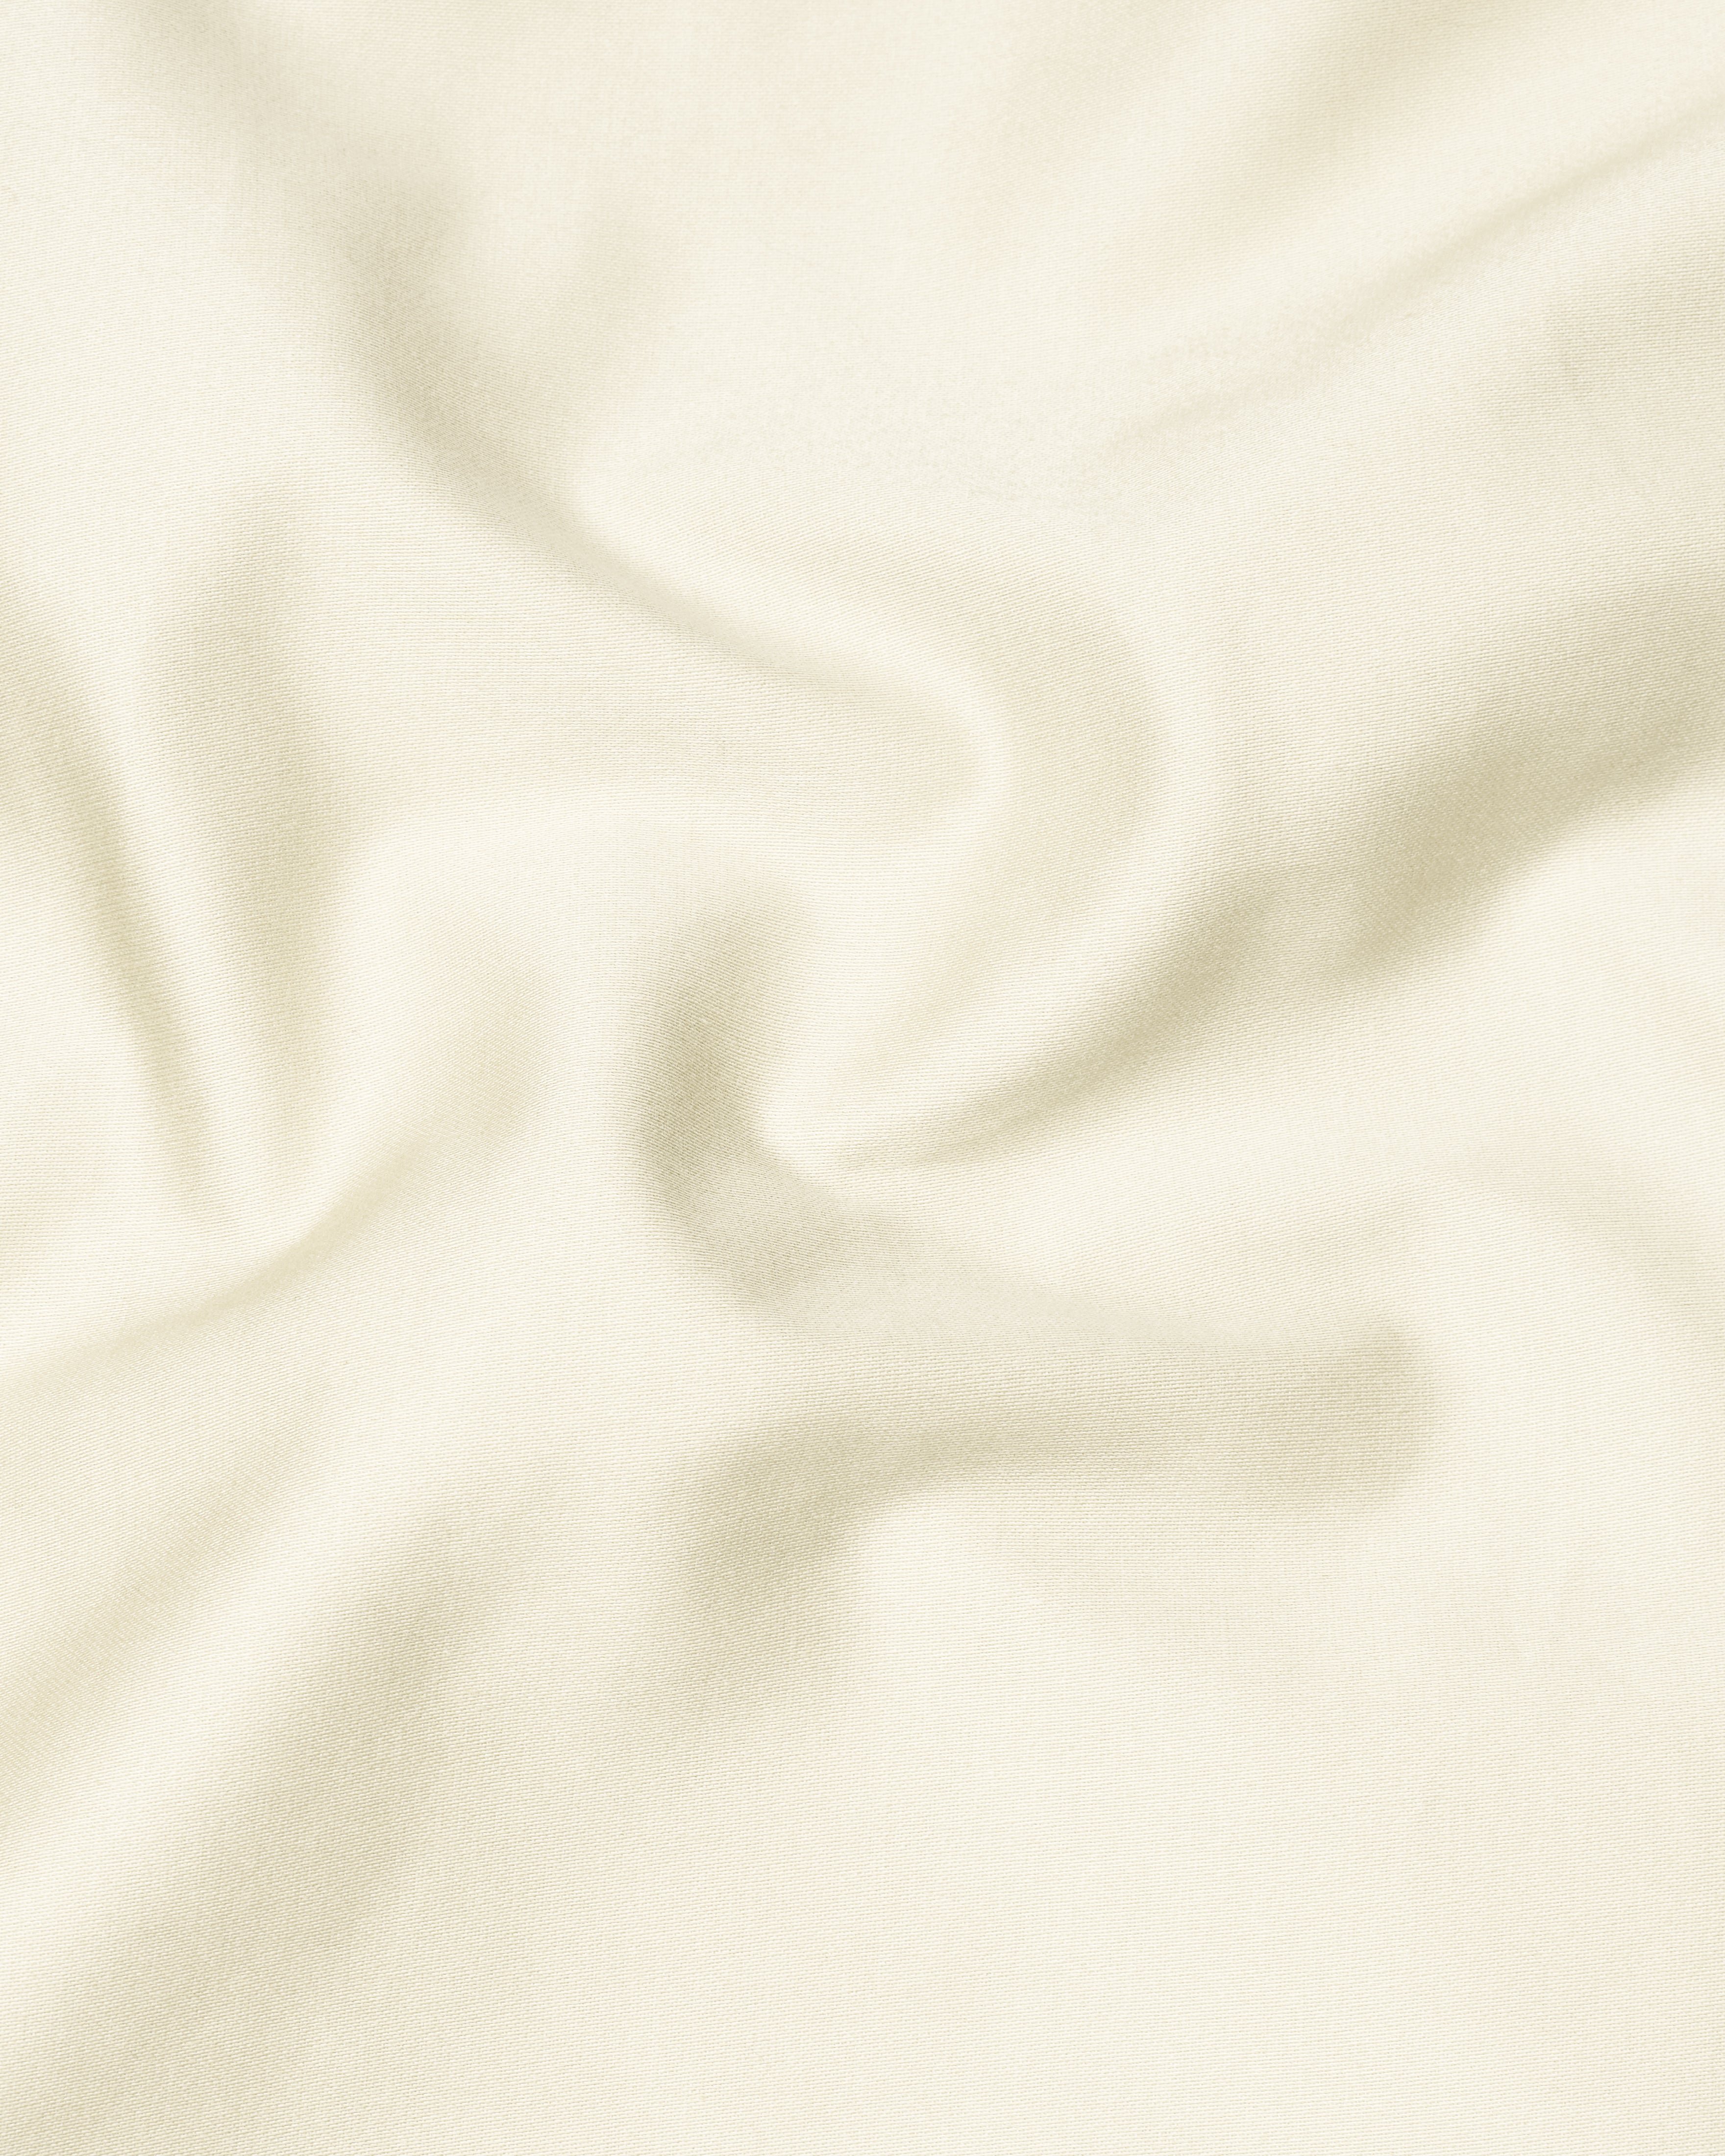 Merino Cream Stretchable Premium Cotton Nehru Jacket WC2689-36, WC2689-38, WC2689-40, WC2689-42, WC2689-44, WC2689-46, WC2689-48, WC2689-50, WC2689-52, WC2689-54, WC2689-56, WC2689-58, WC2689-60